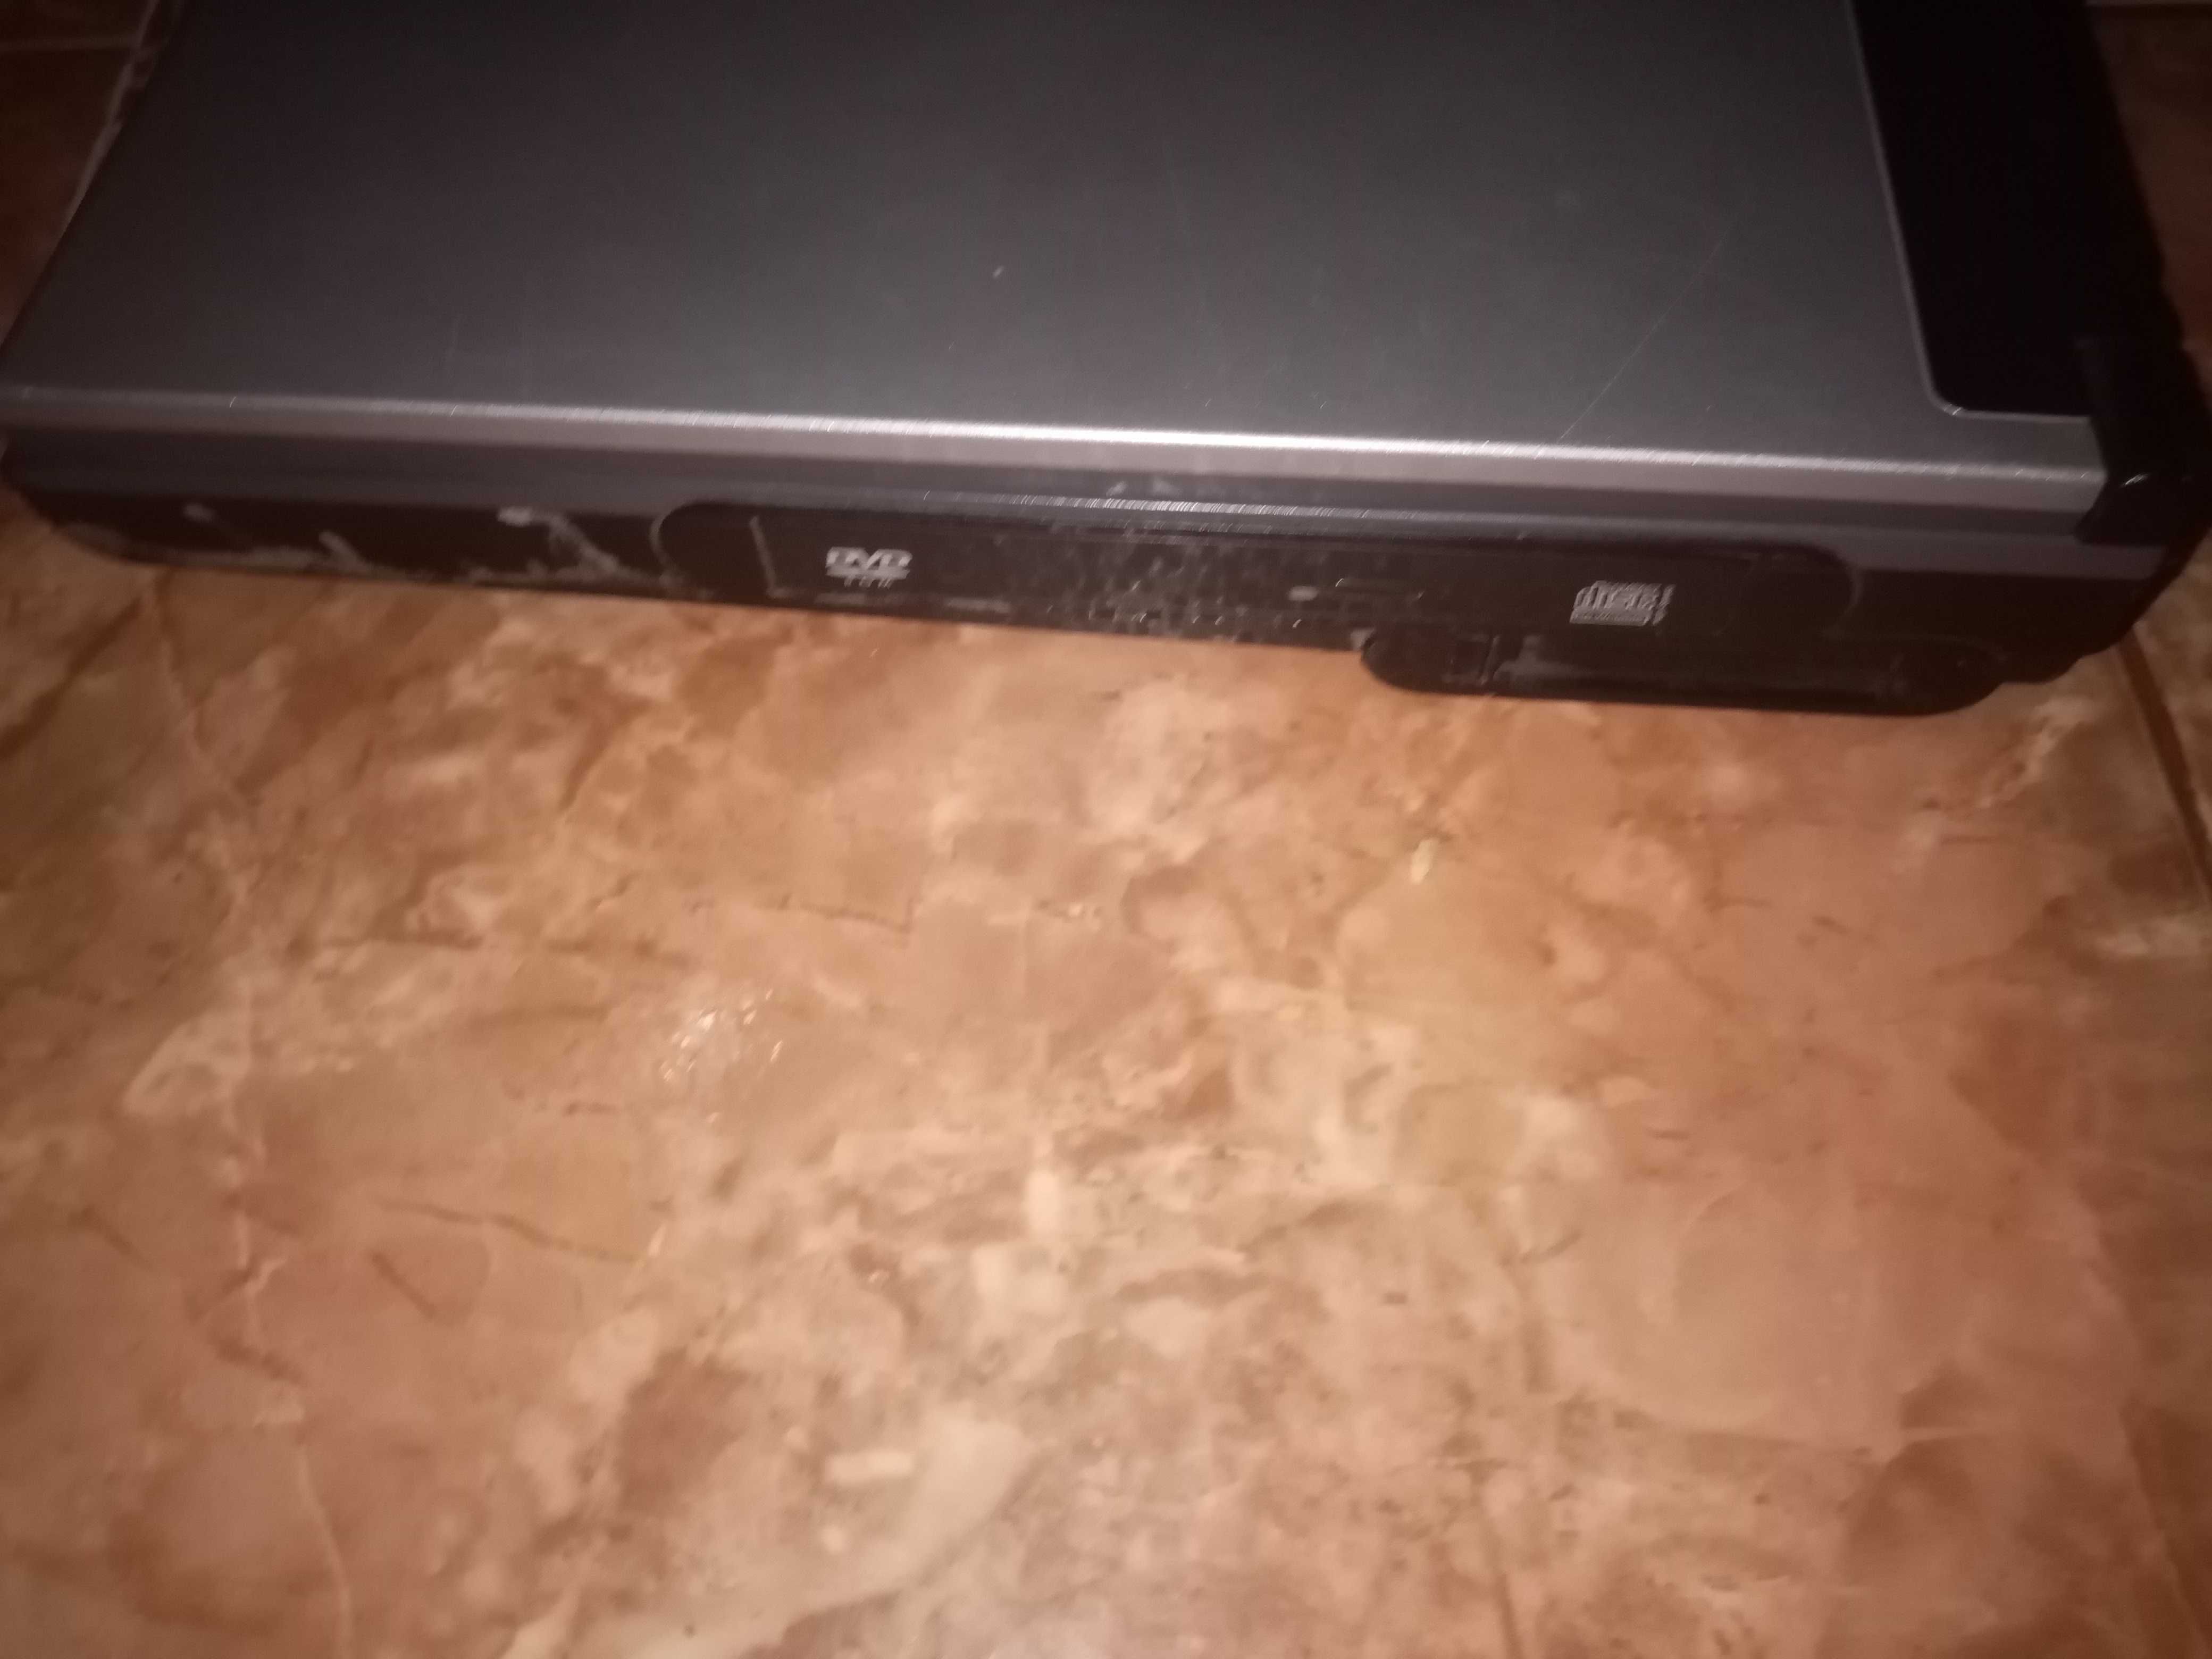 Laptop Acer Aspire 1350